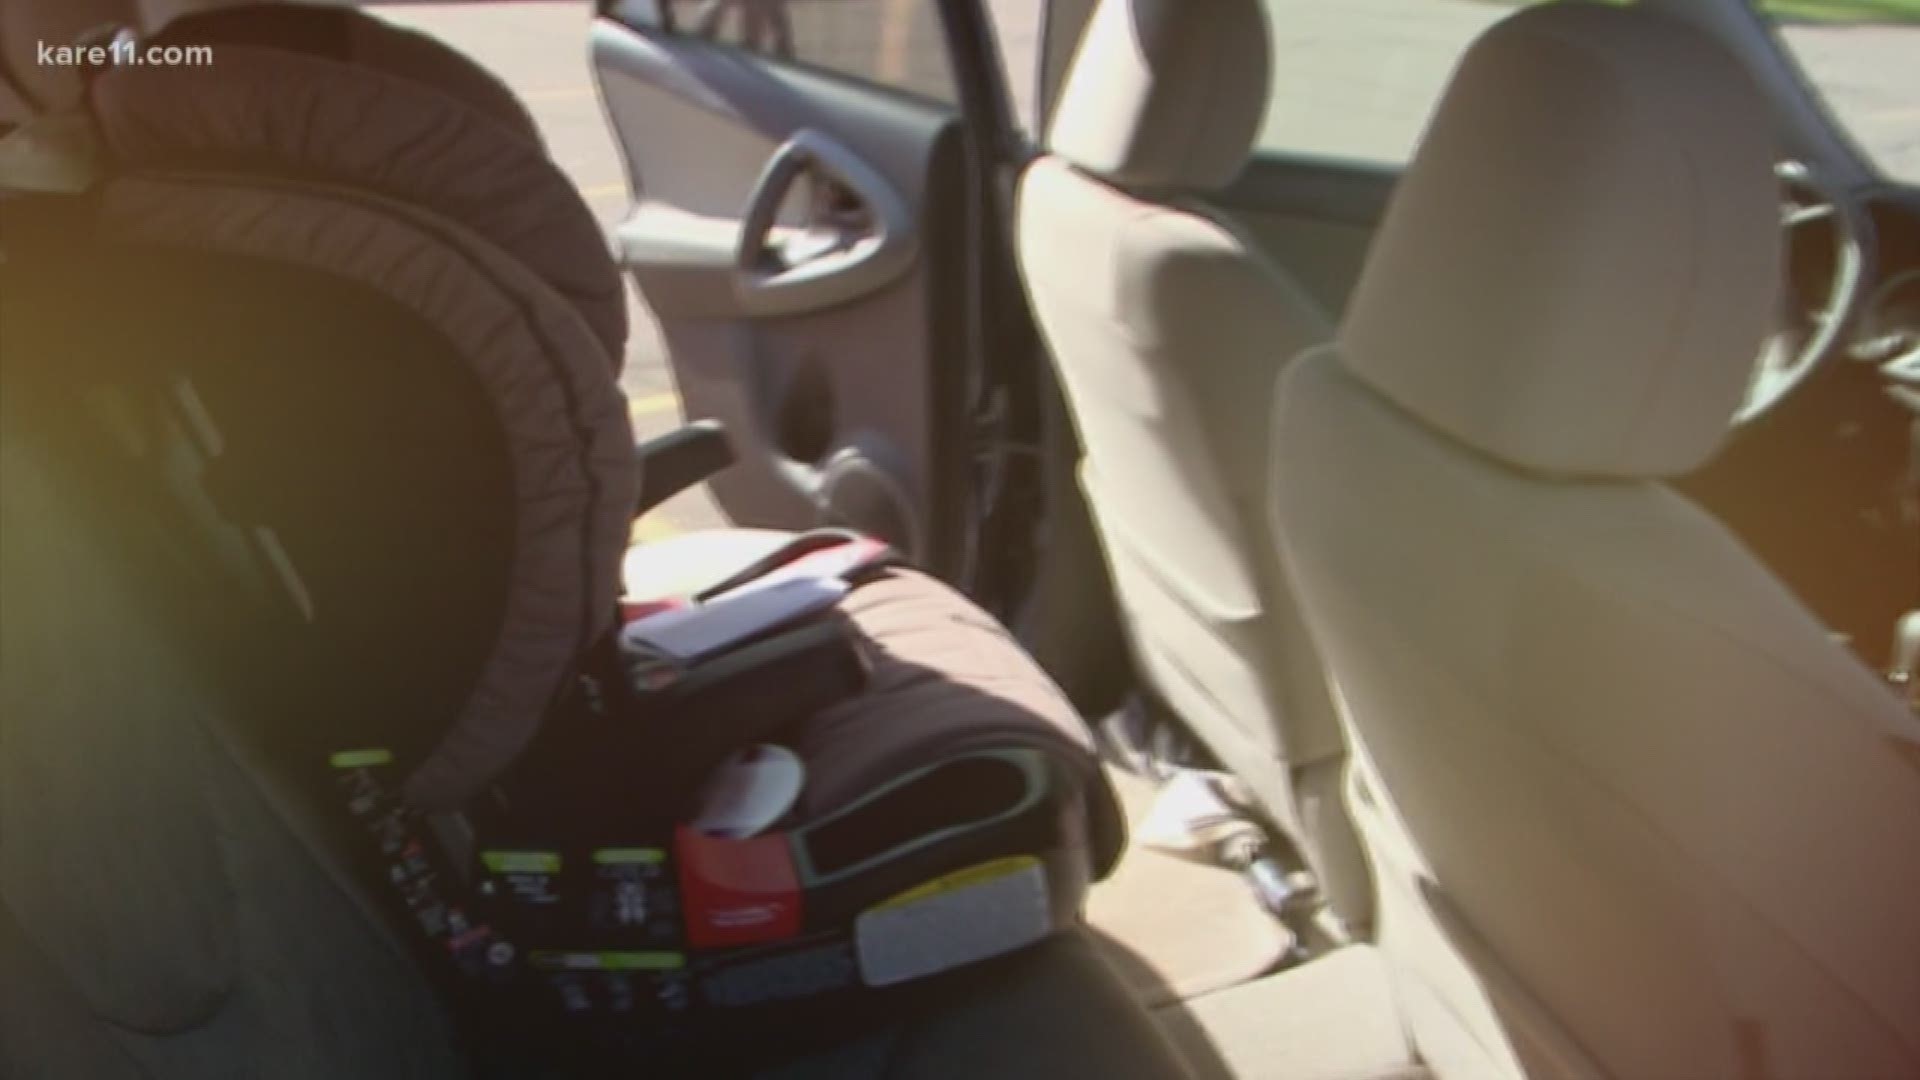 Children's car seats break in Consumer Reports tests